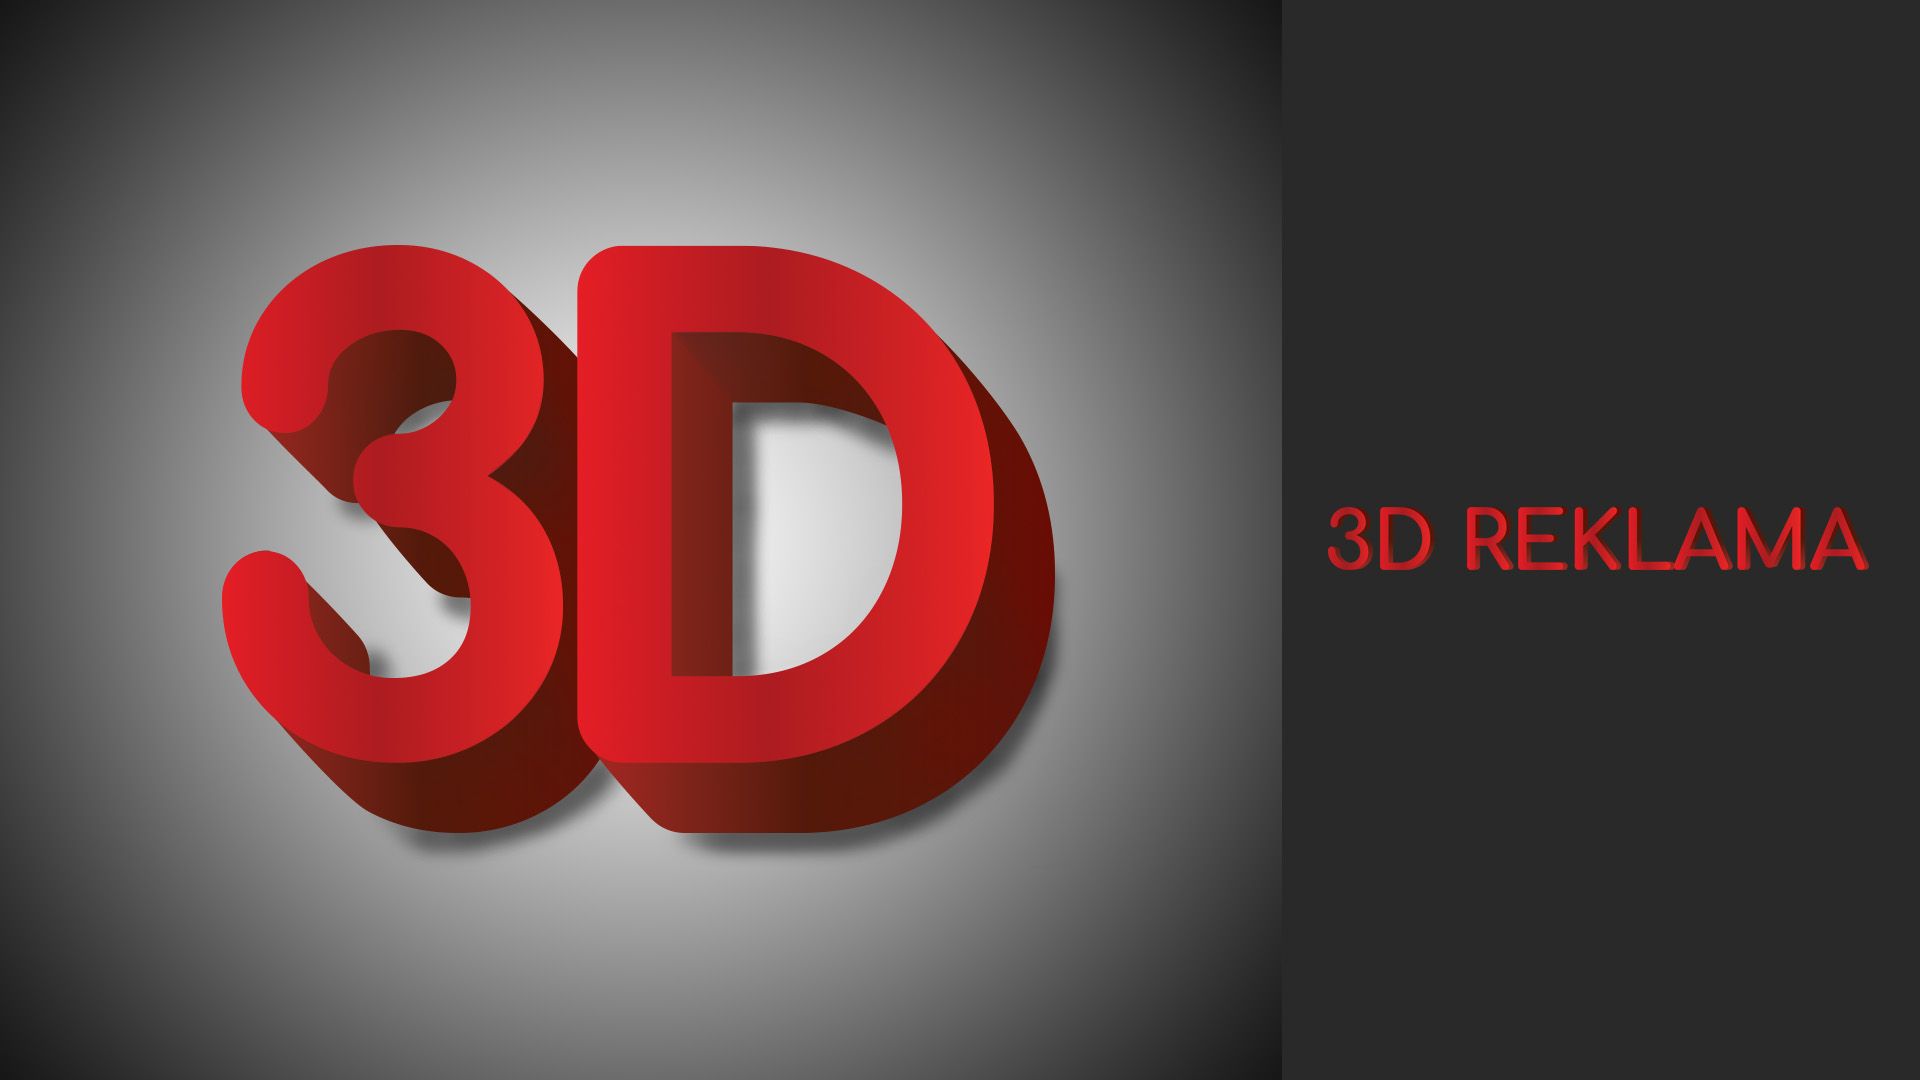 3D Reklama